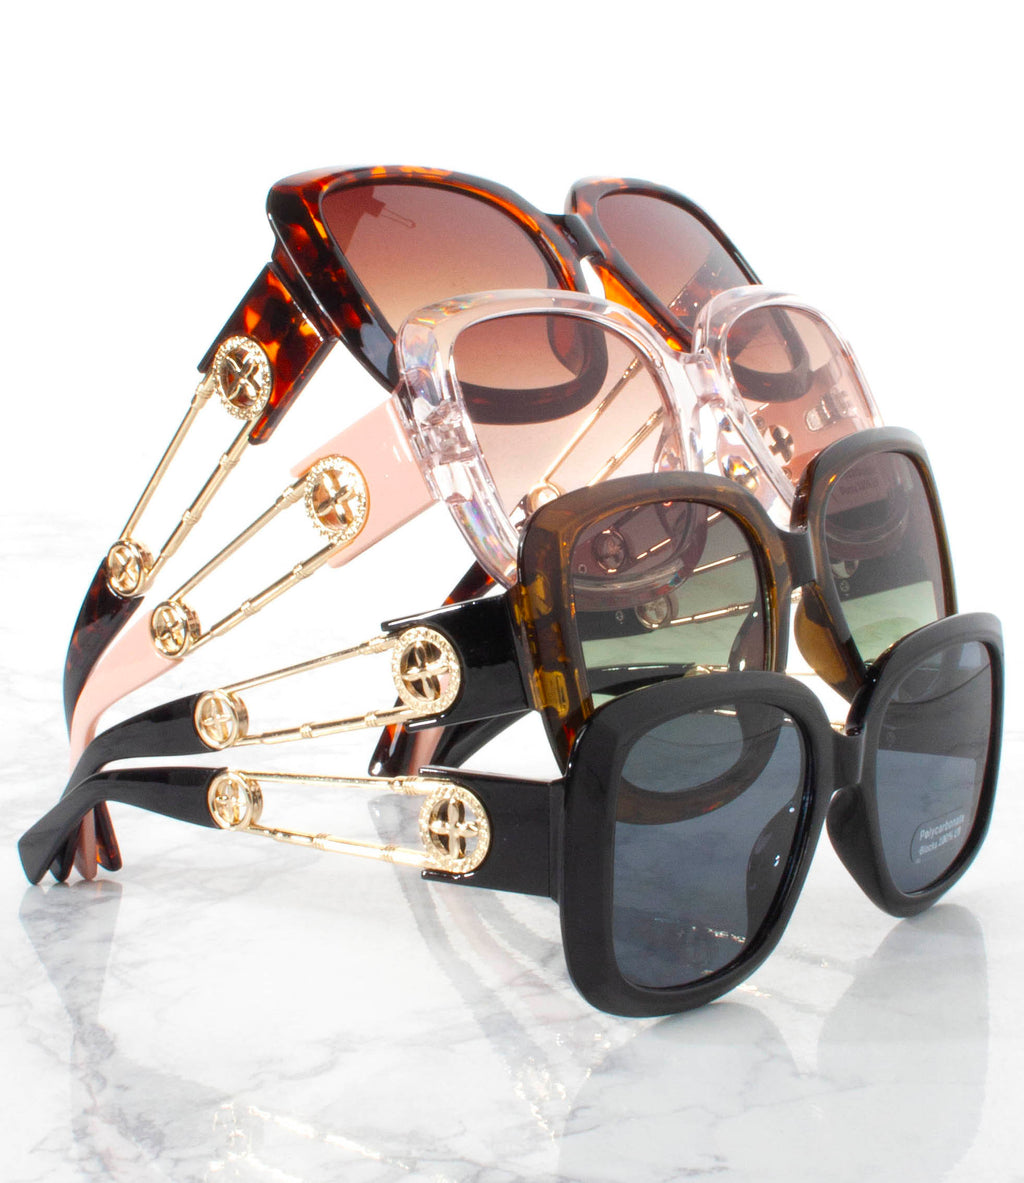 Wholesale Fashion Sunglasses - MP51012AP - Pack of 12